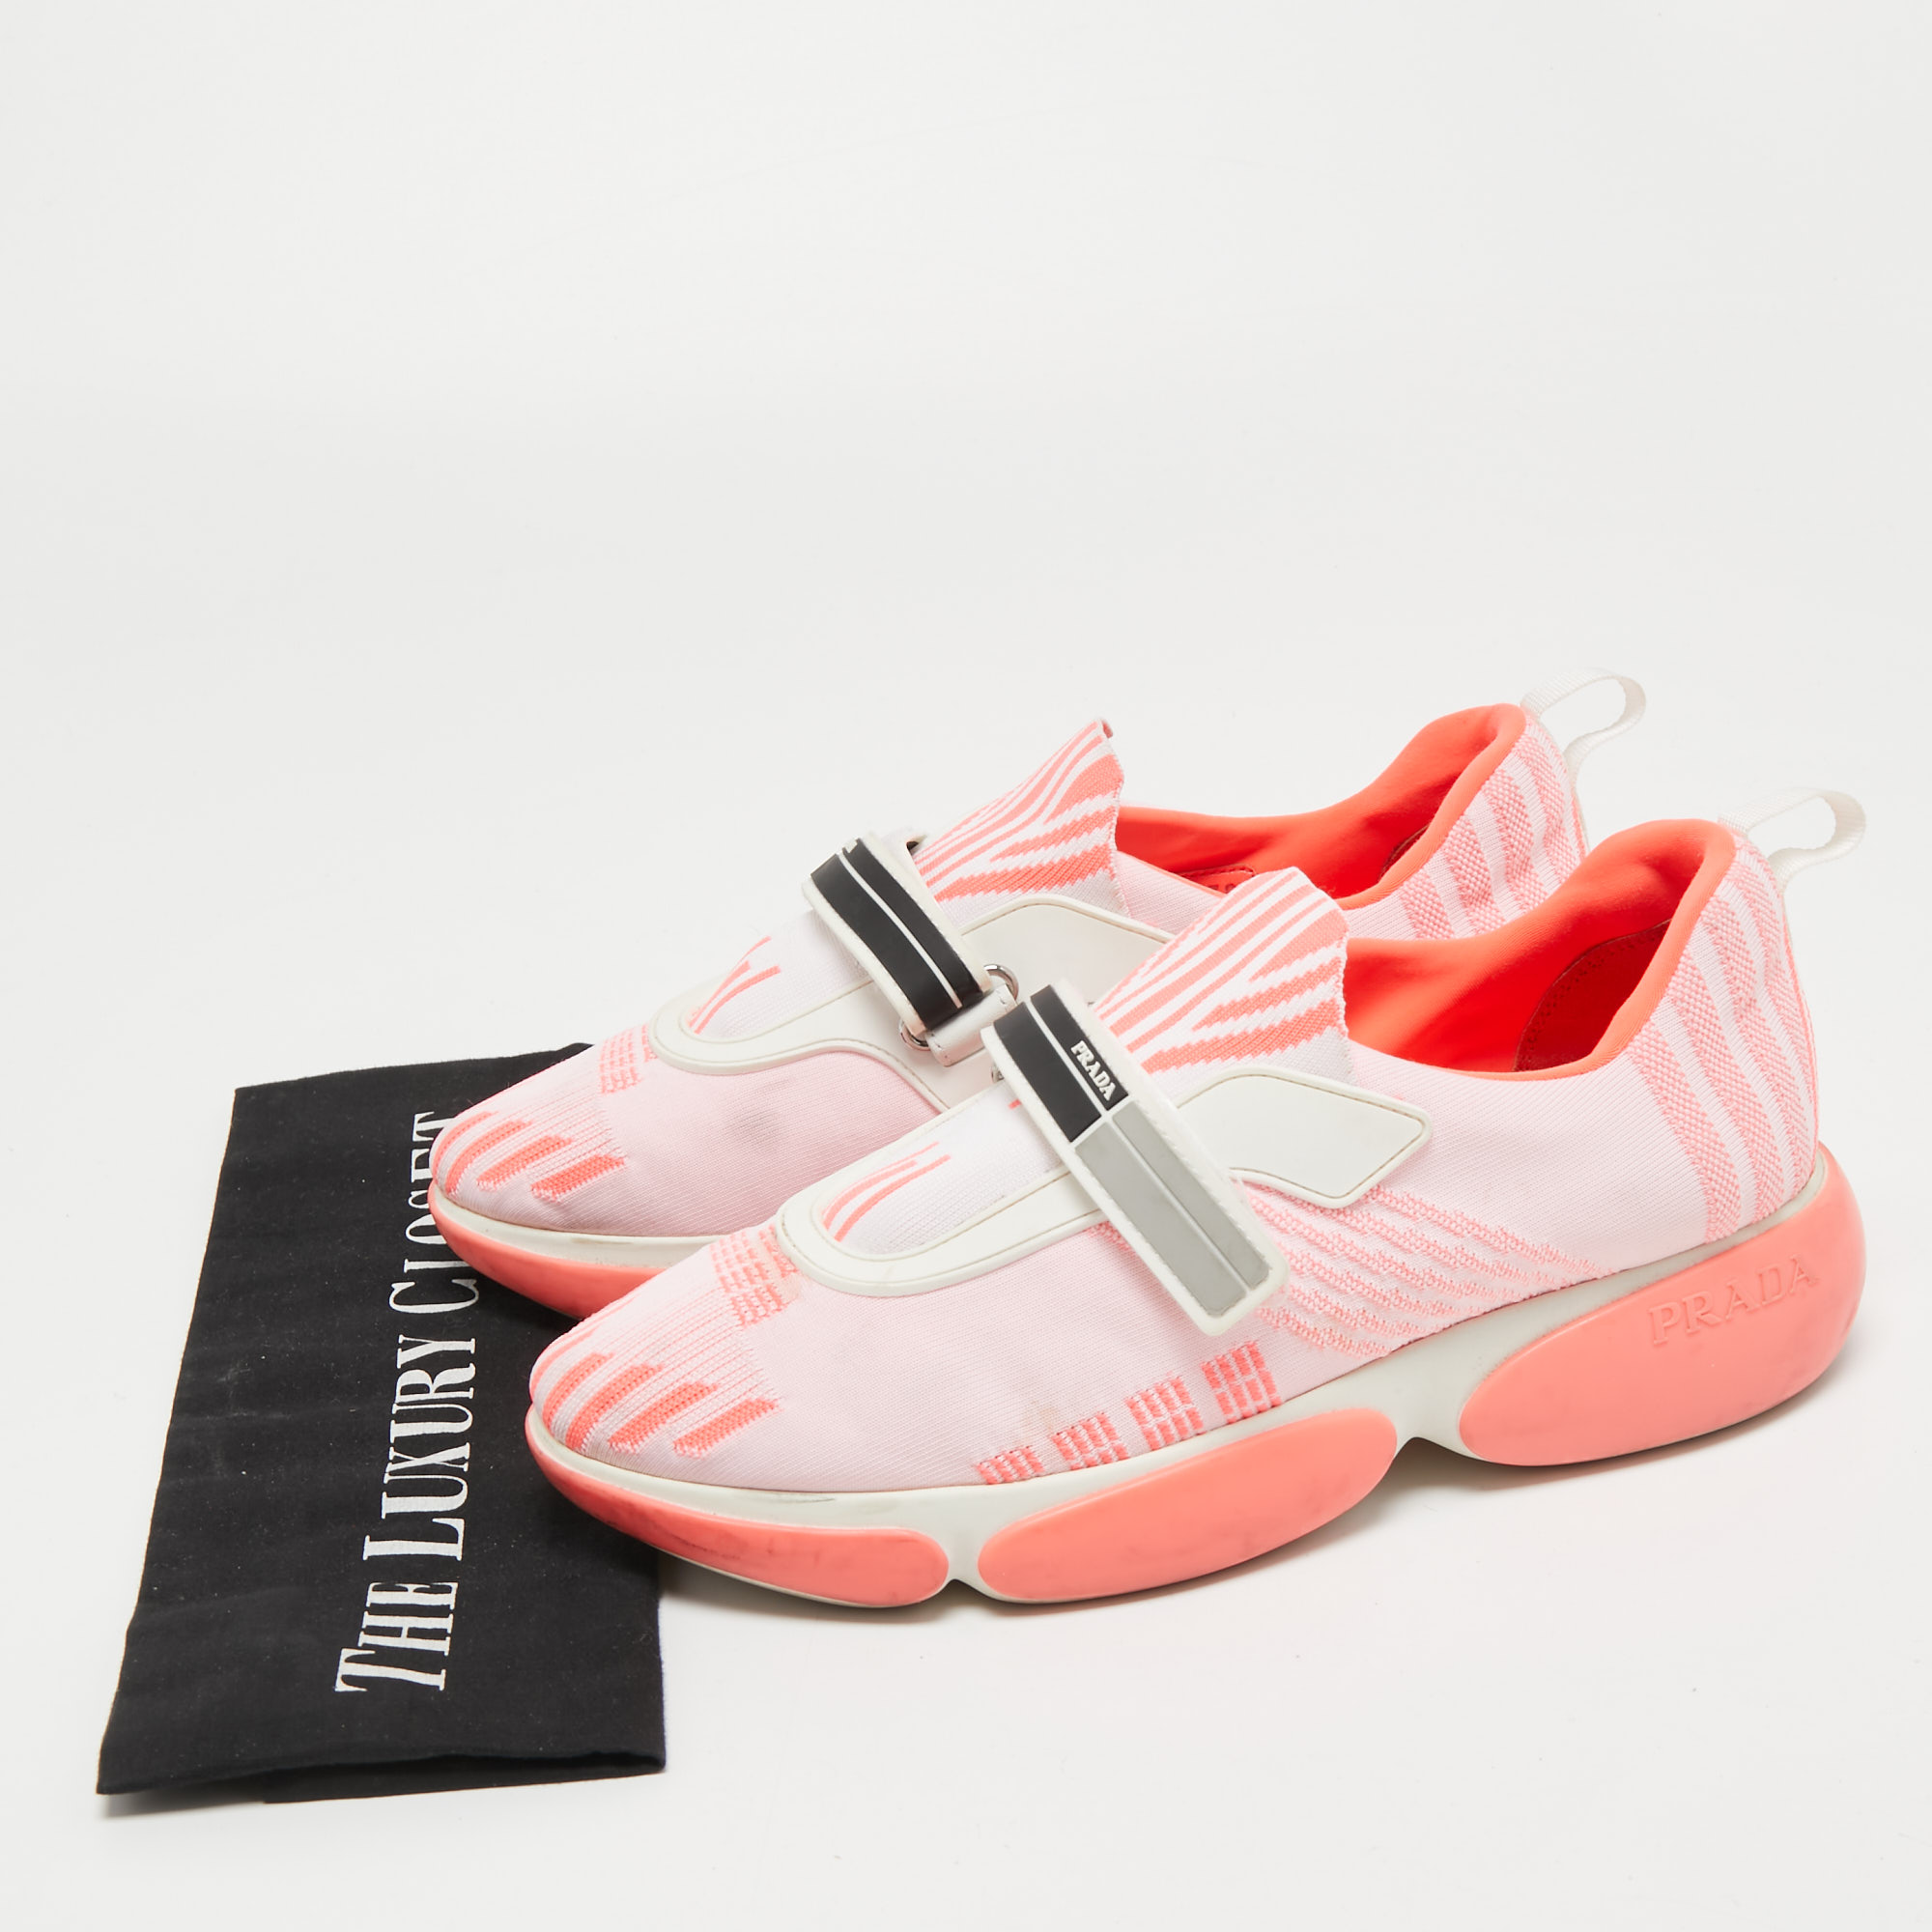 Prada Pink Fabric Slip On Sneakers Size 38